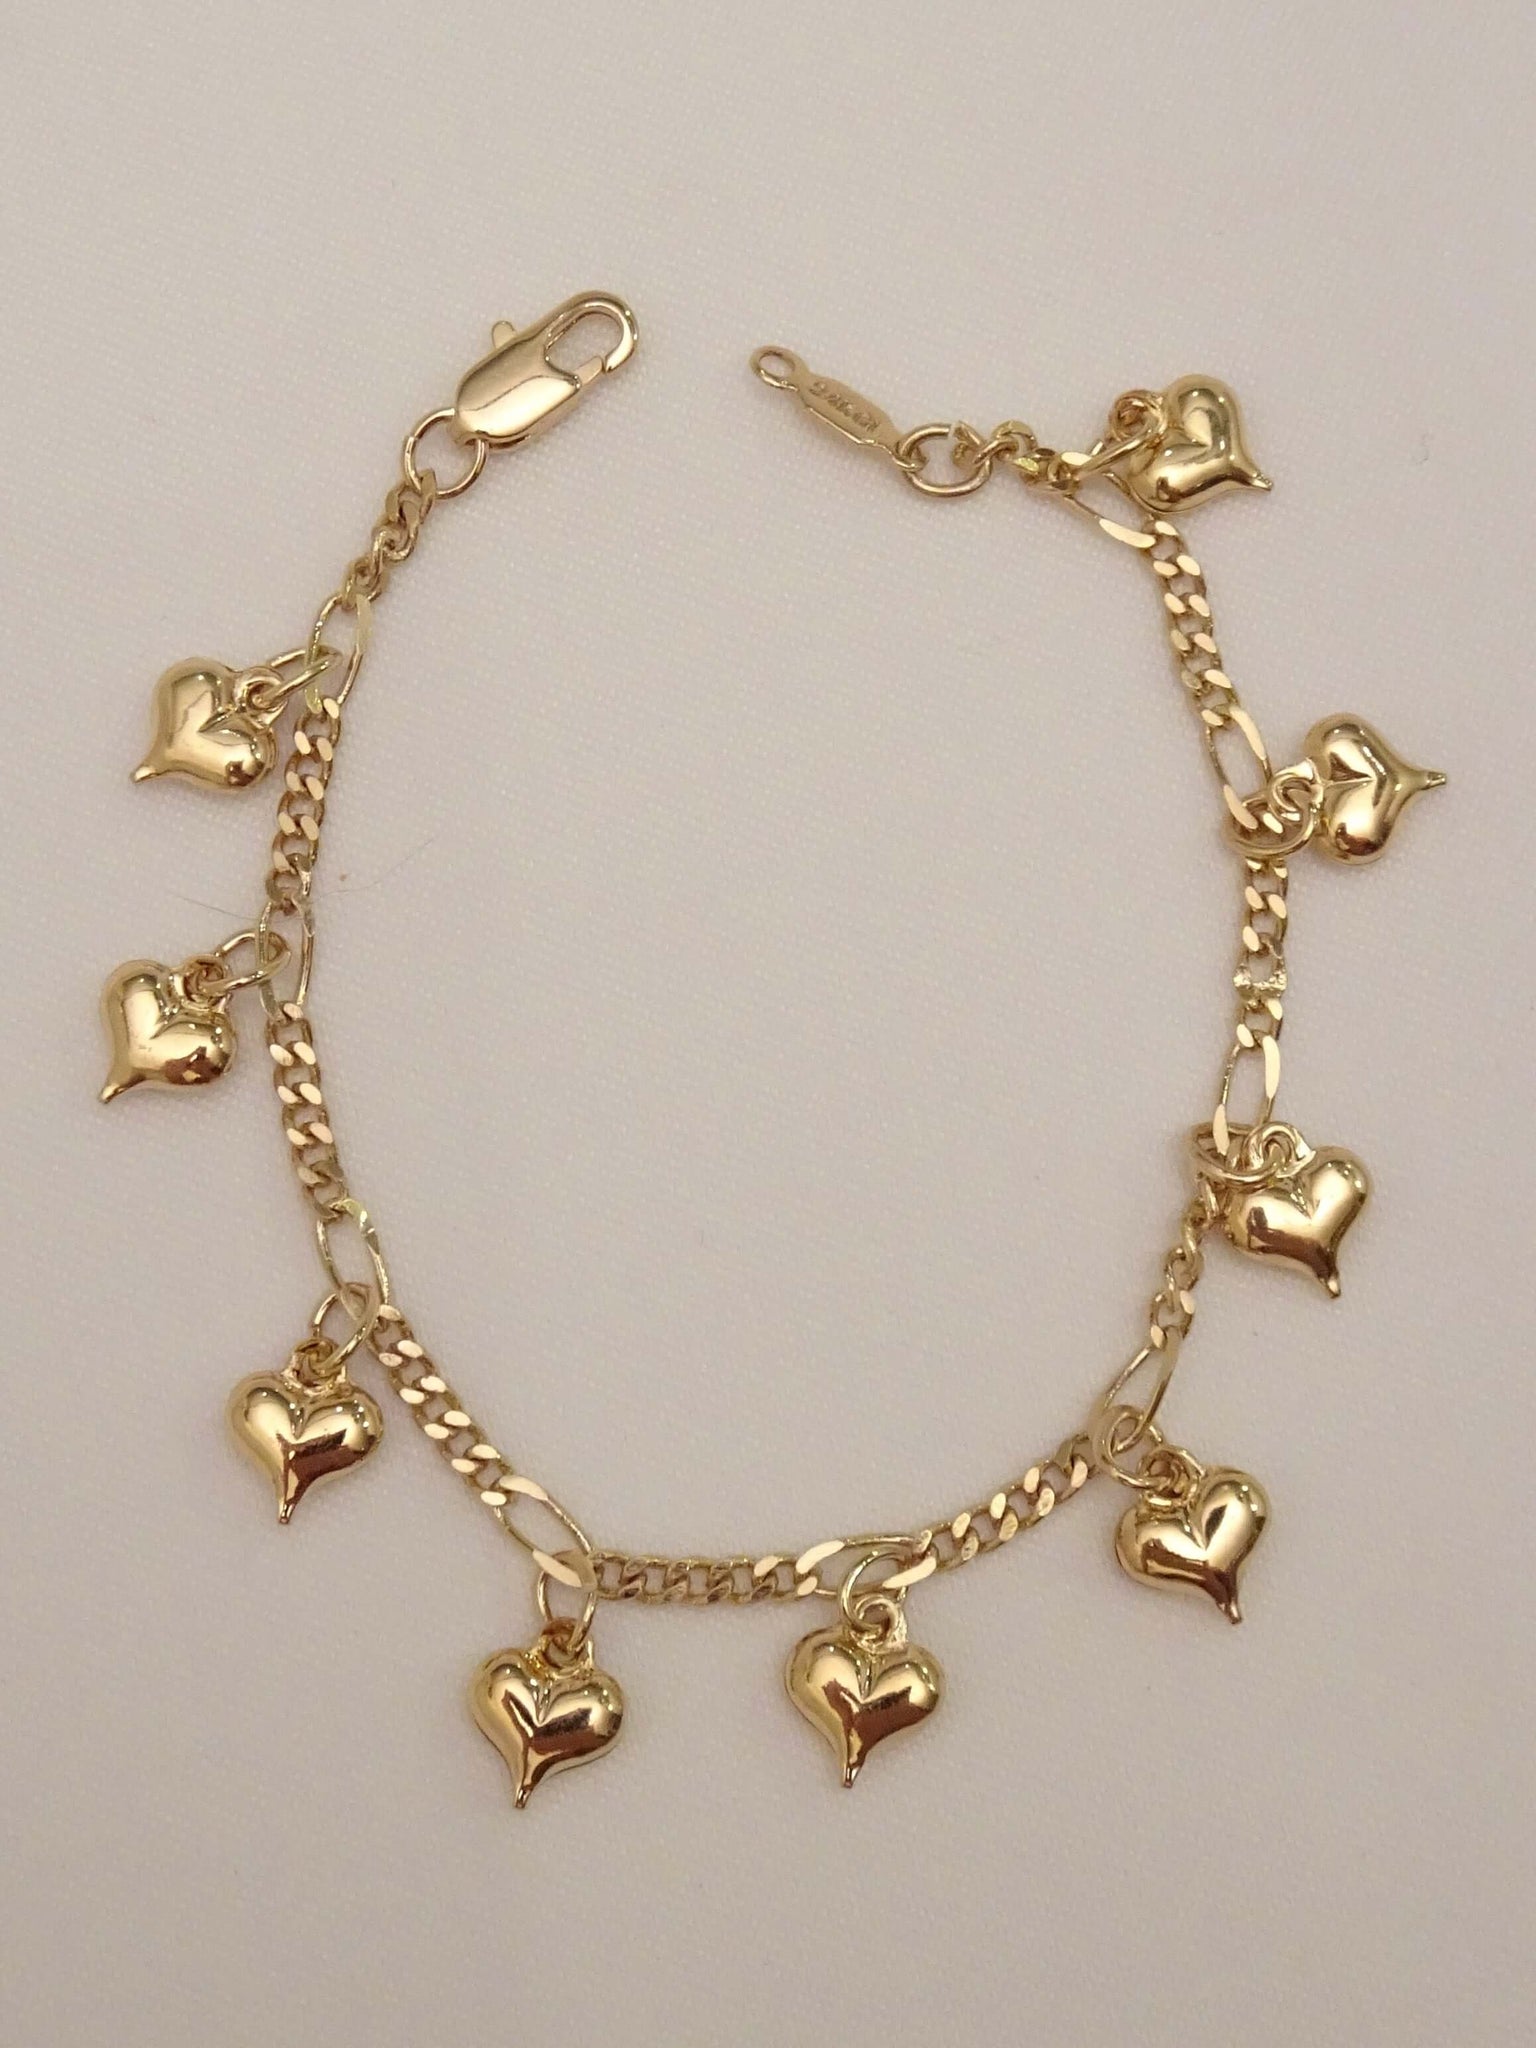 Solid 10K Yellow Gold Wide Heart Gucci Link Bracelet 8.25 | eBay